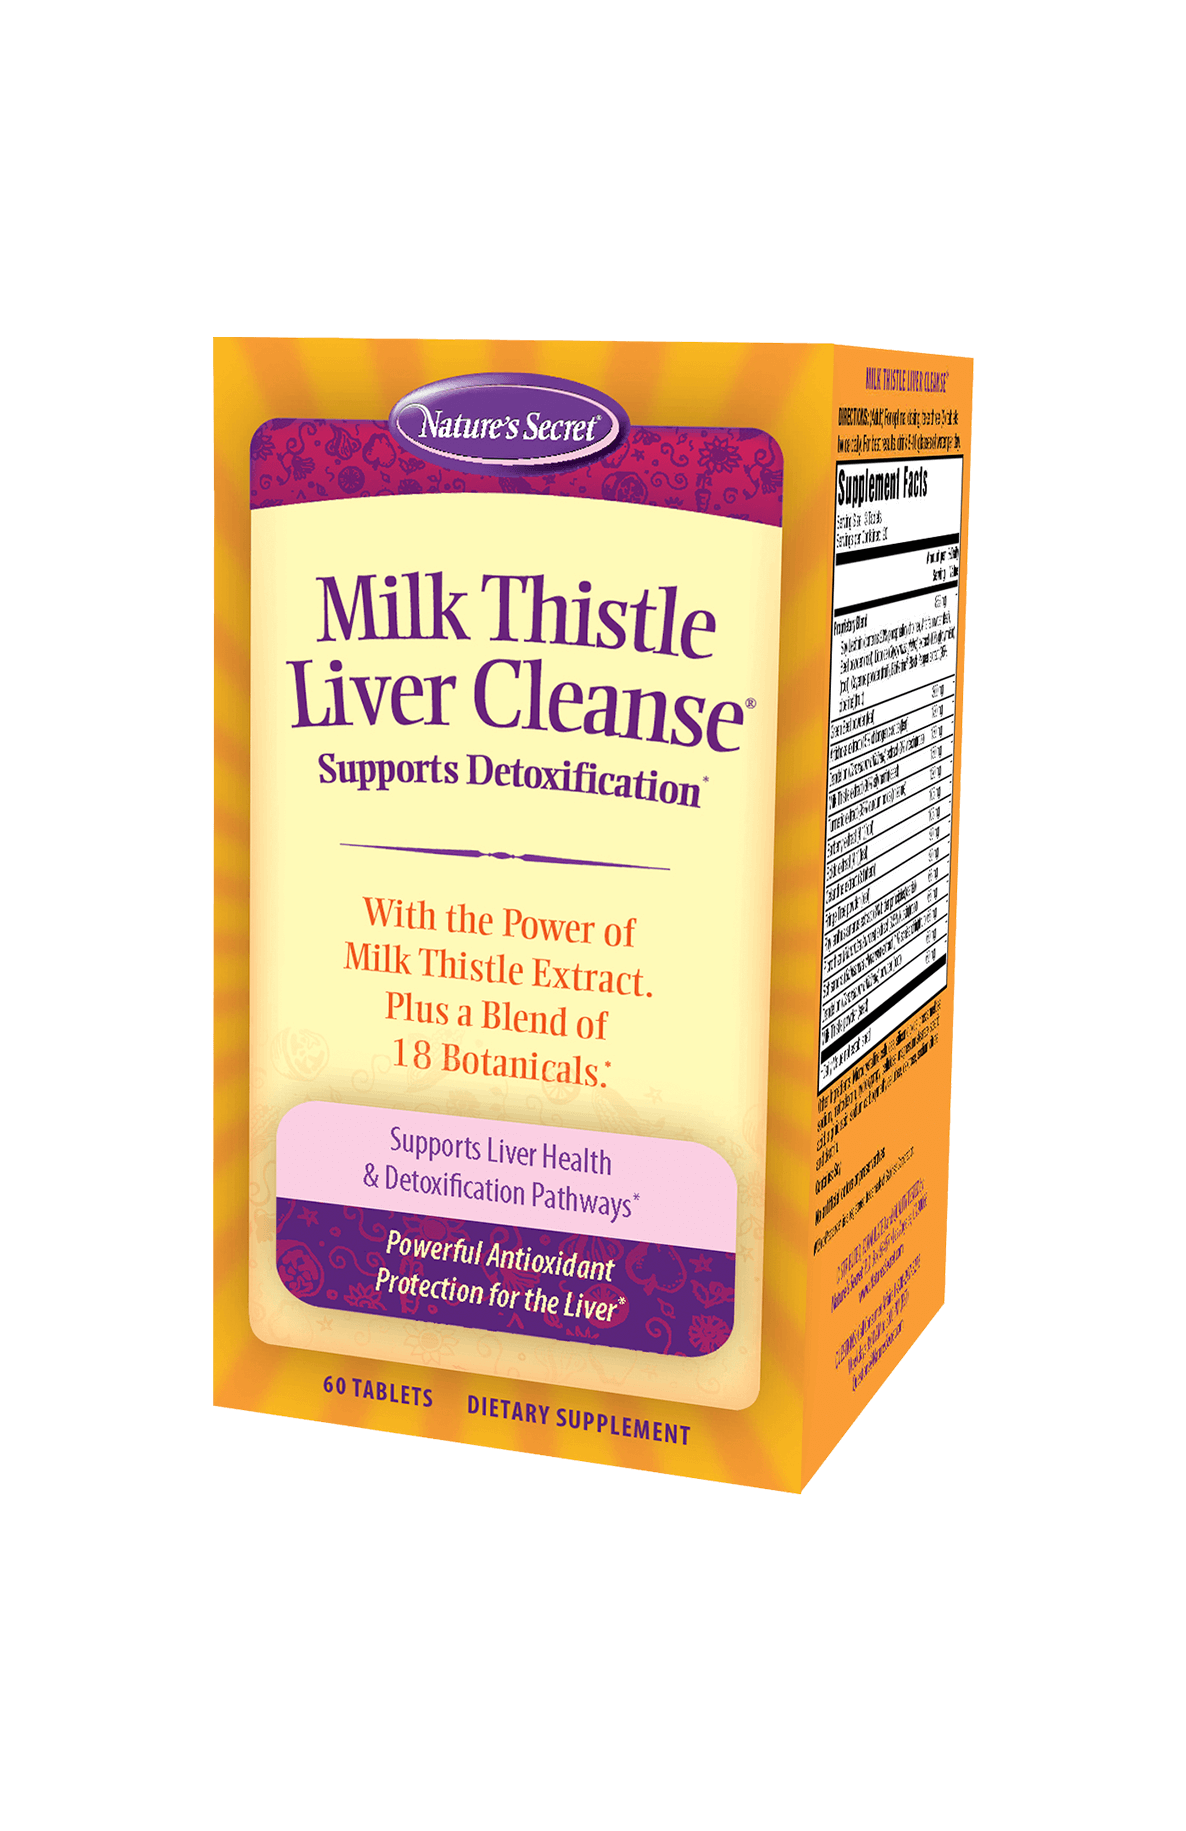 Milk Thistle Liver Cleanse Supports Detoxification by Nature's Secret 